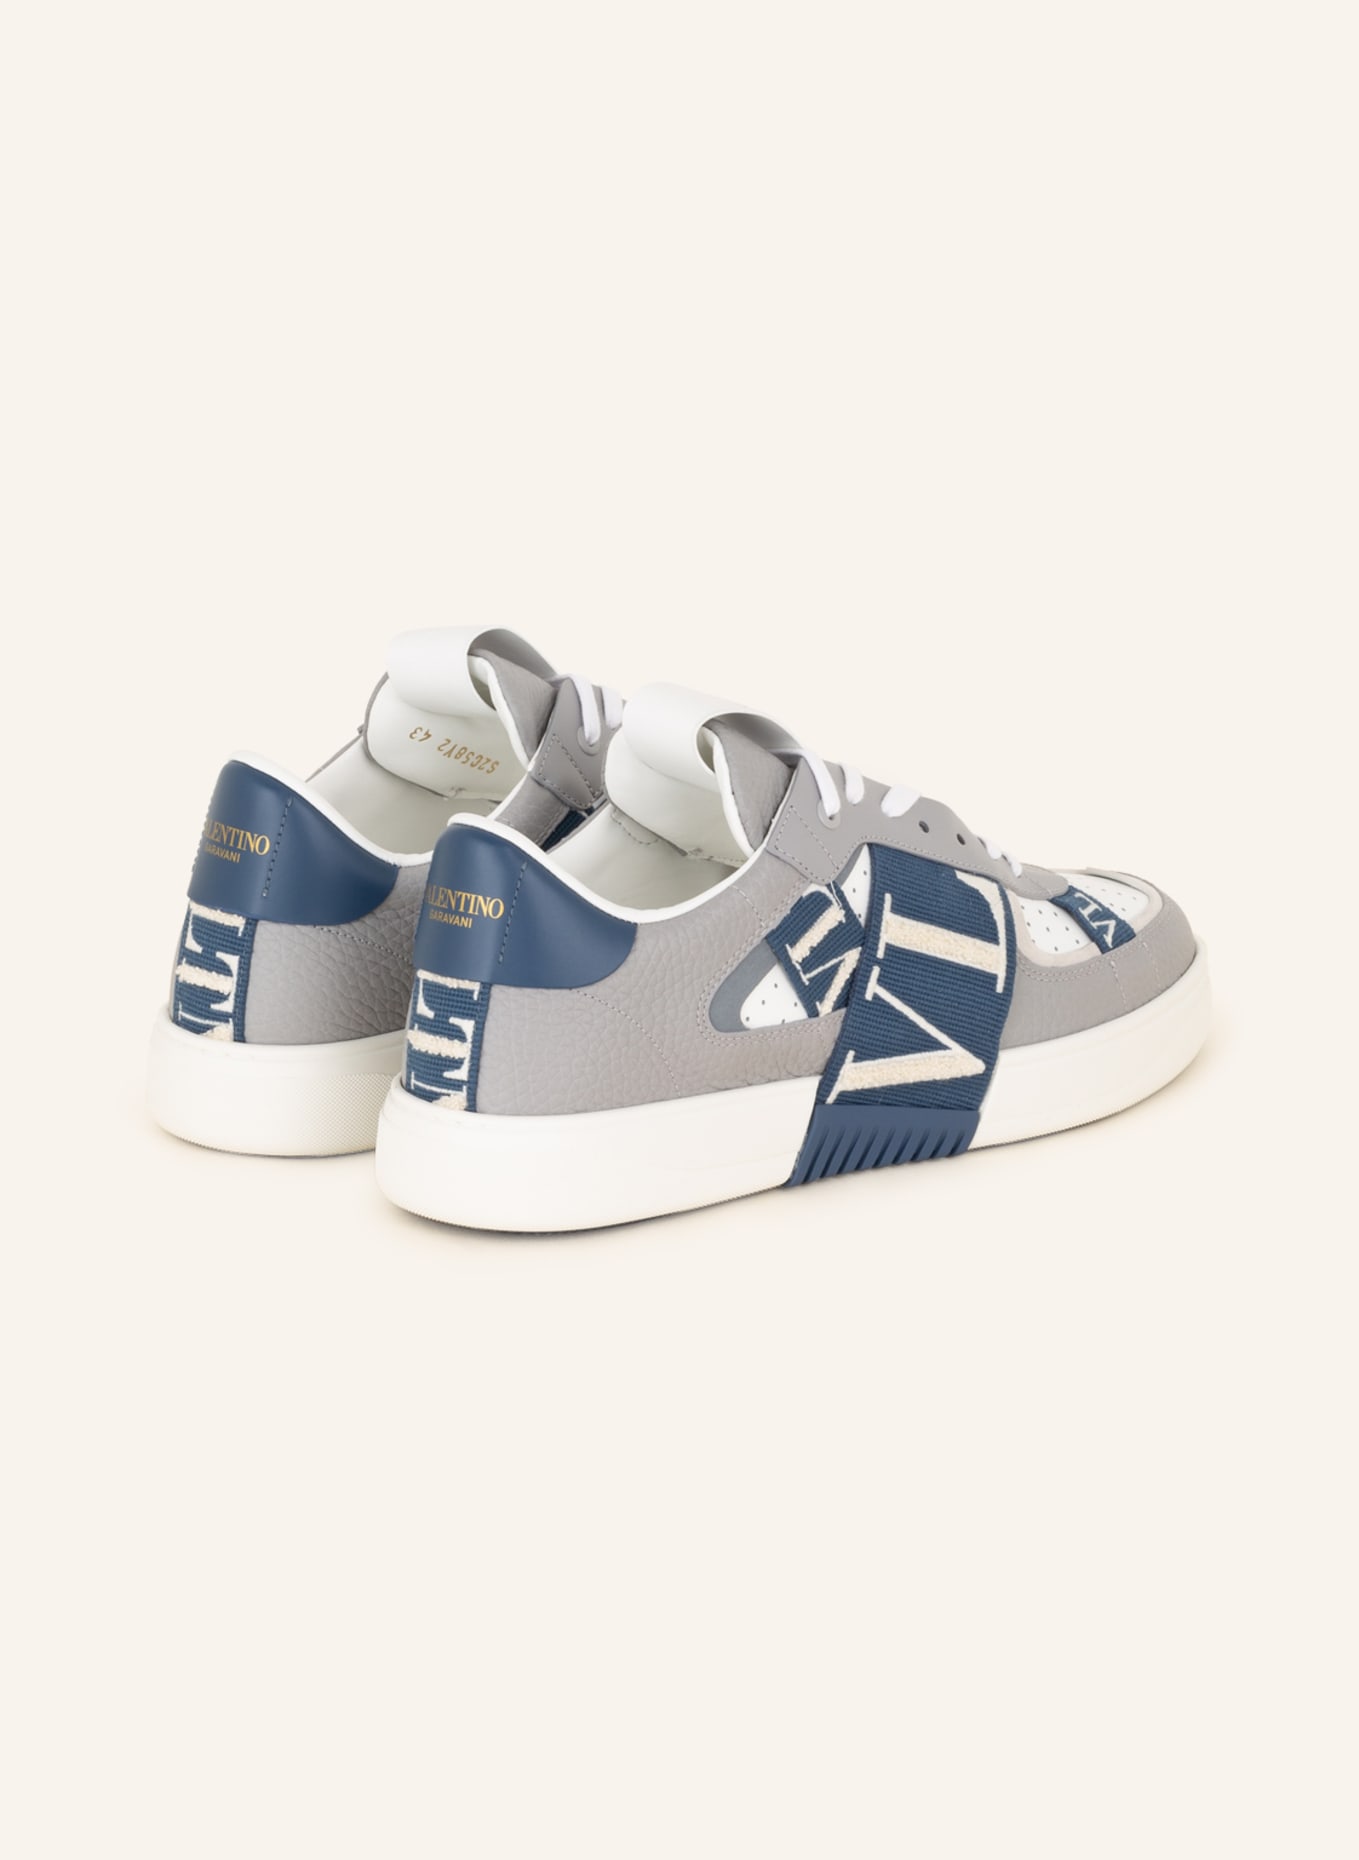 VALENTINO GARAVANI Sneakers gray/ blue